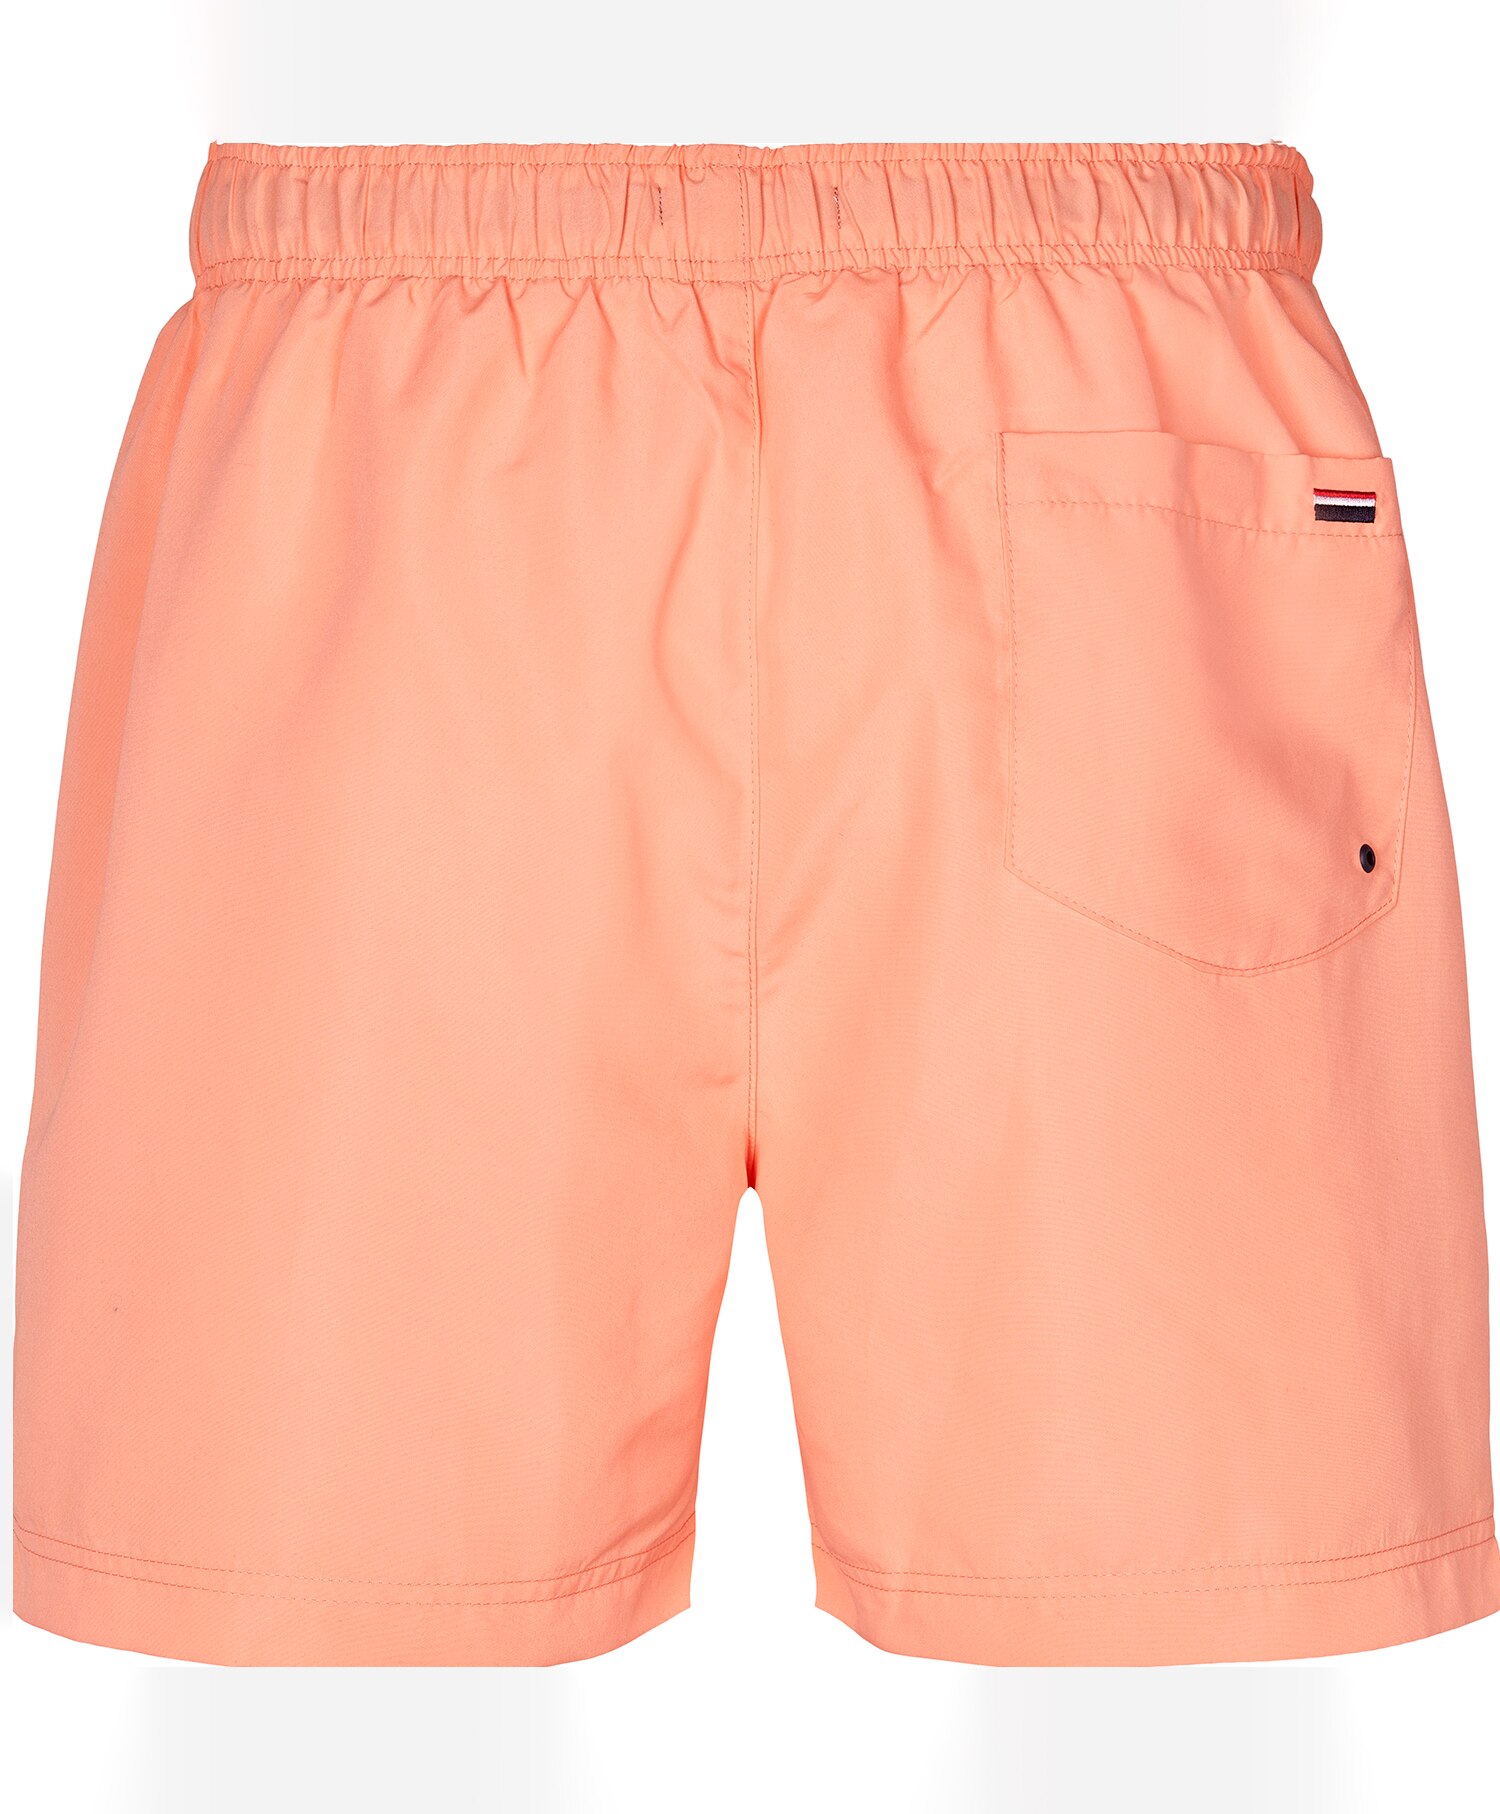 U.S.Polo Alexander shorts